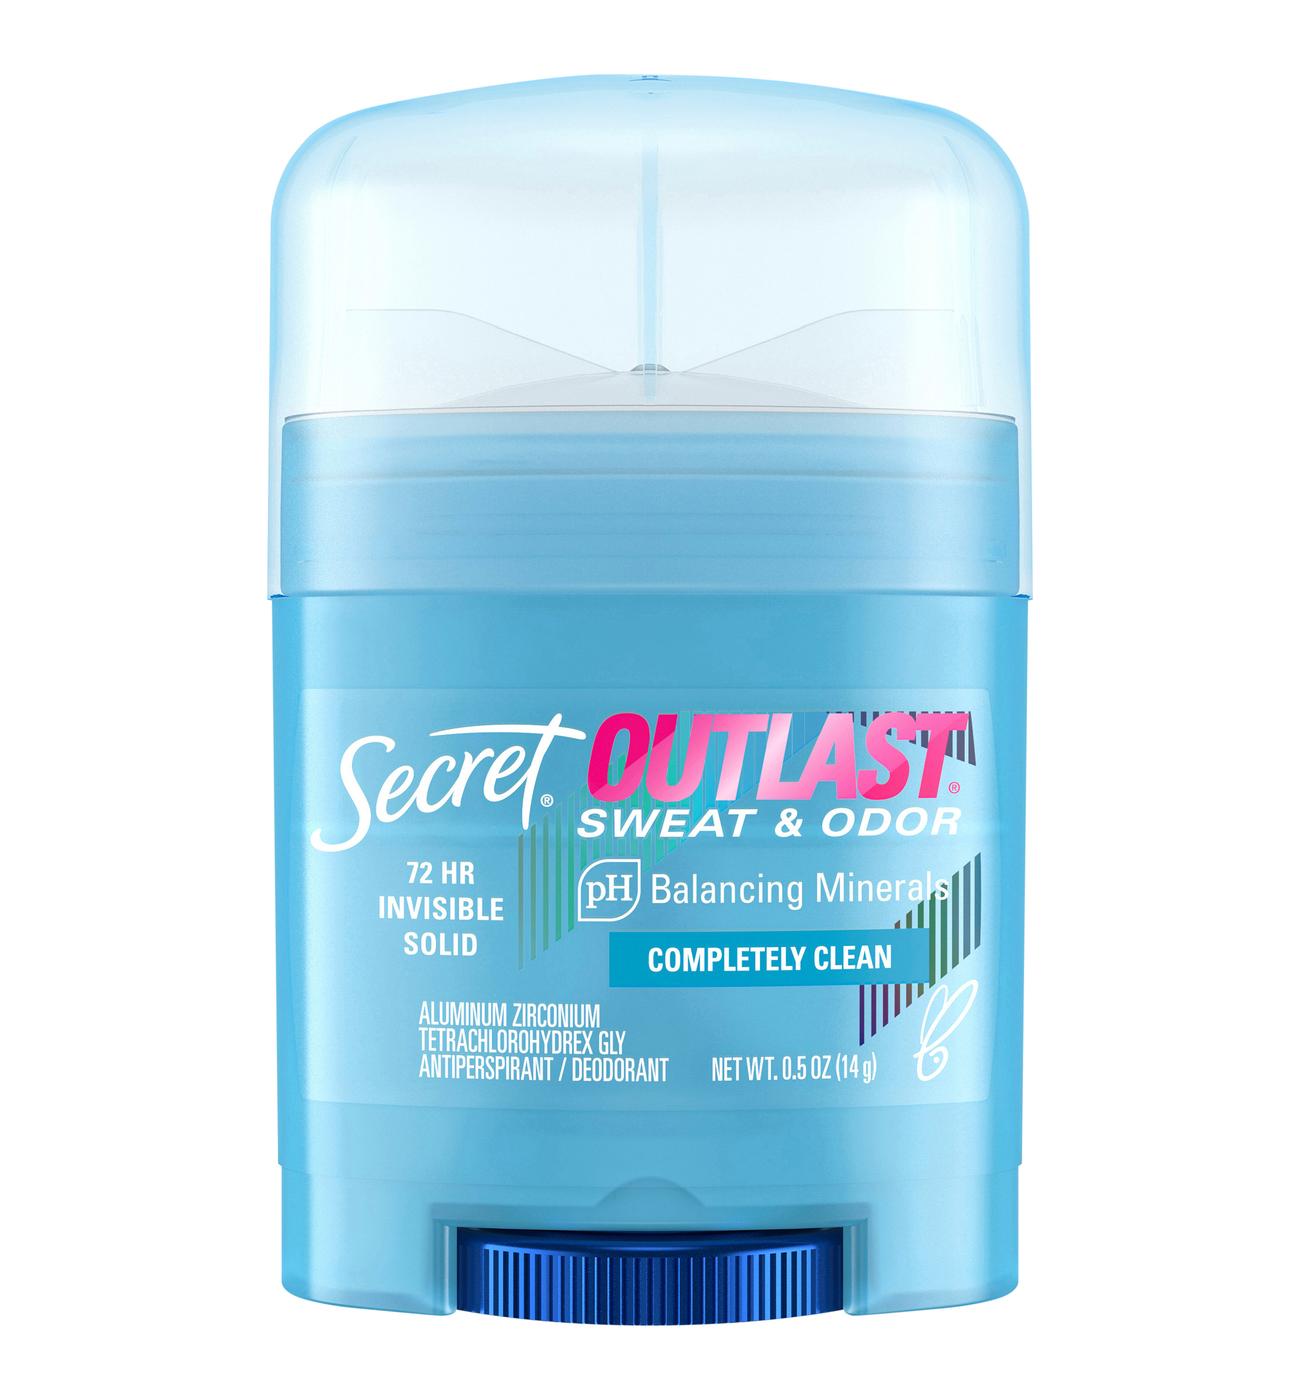 Secret Outlast Sweat & Odor Antiperspirant & Deodorant - Completely Clean; image 1 of 6